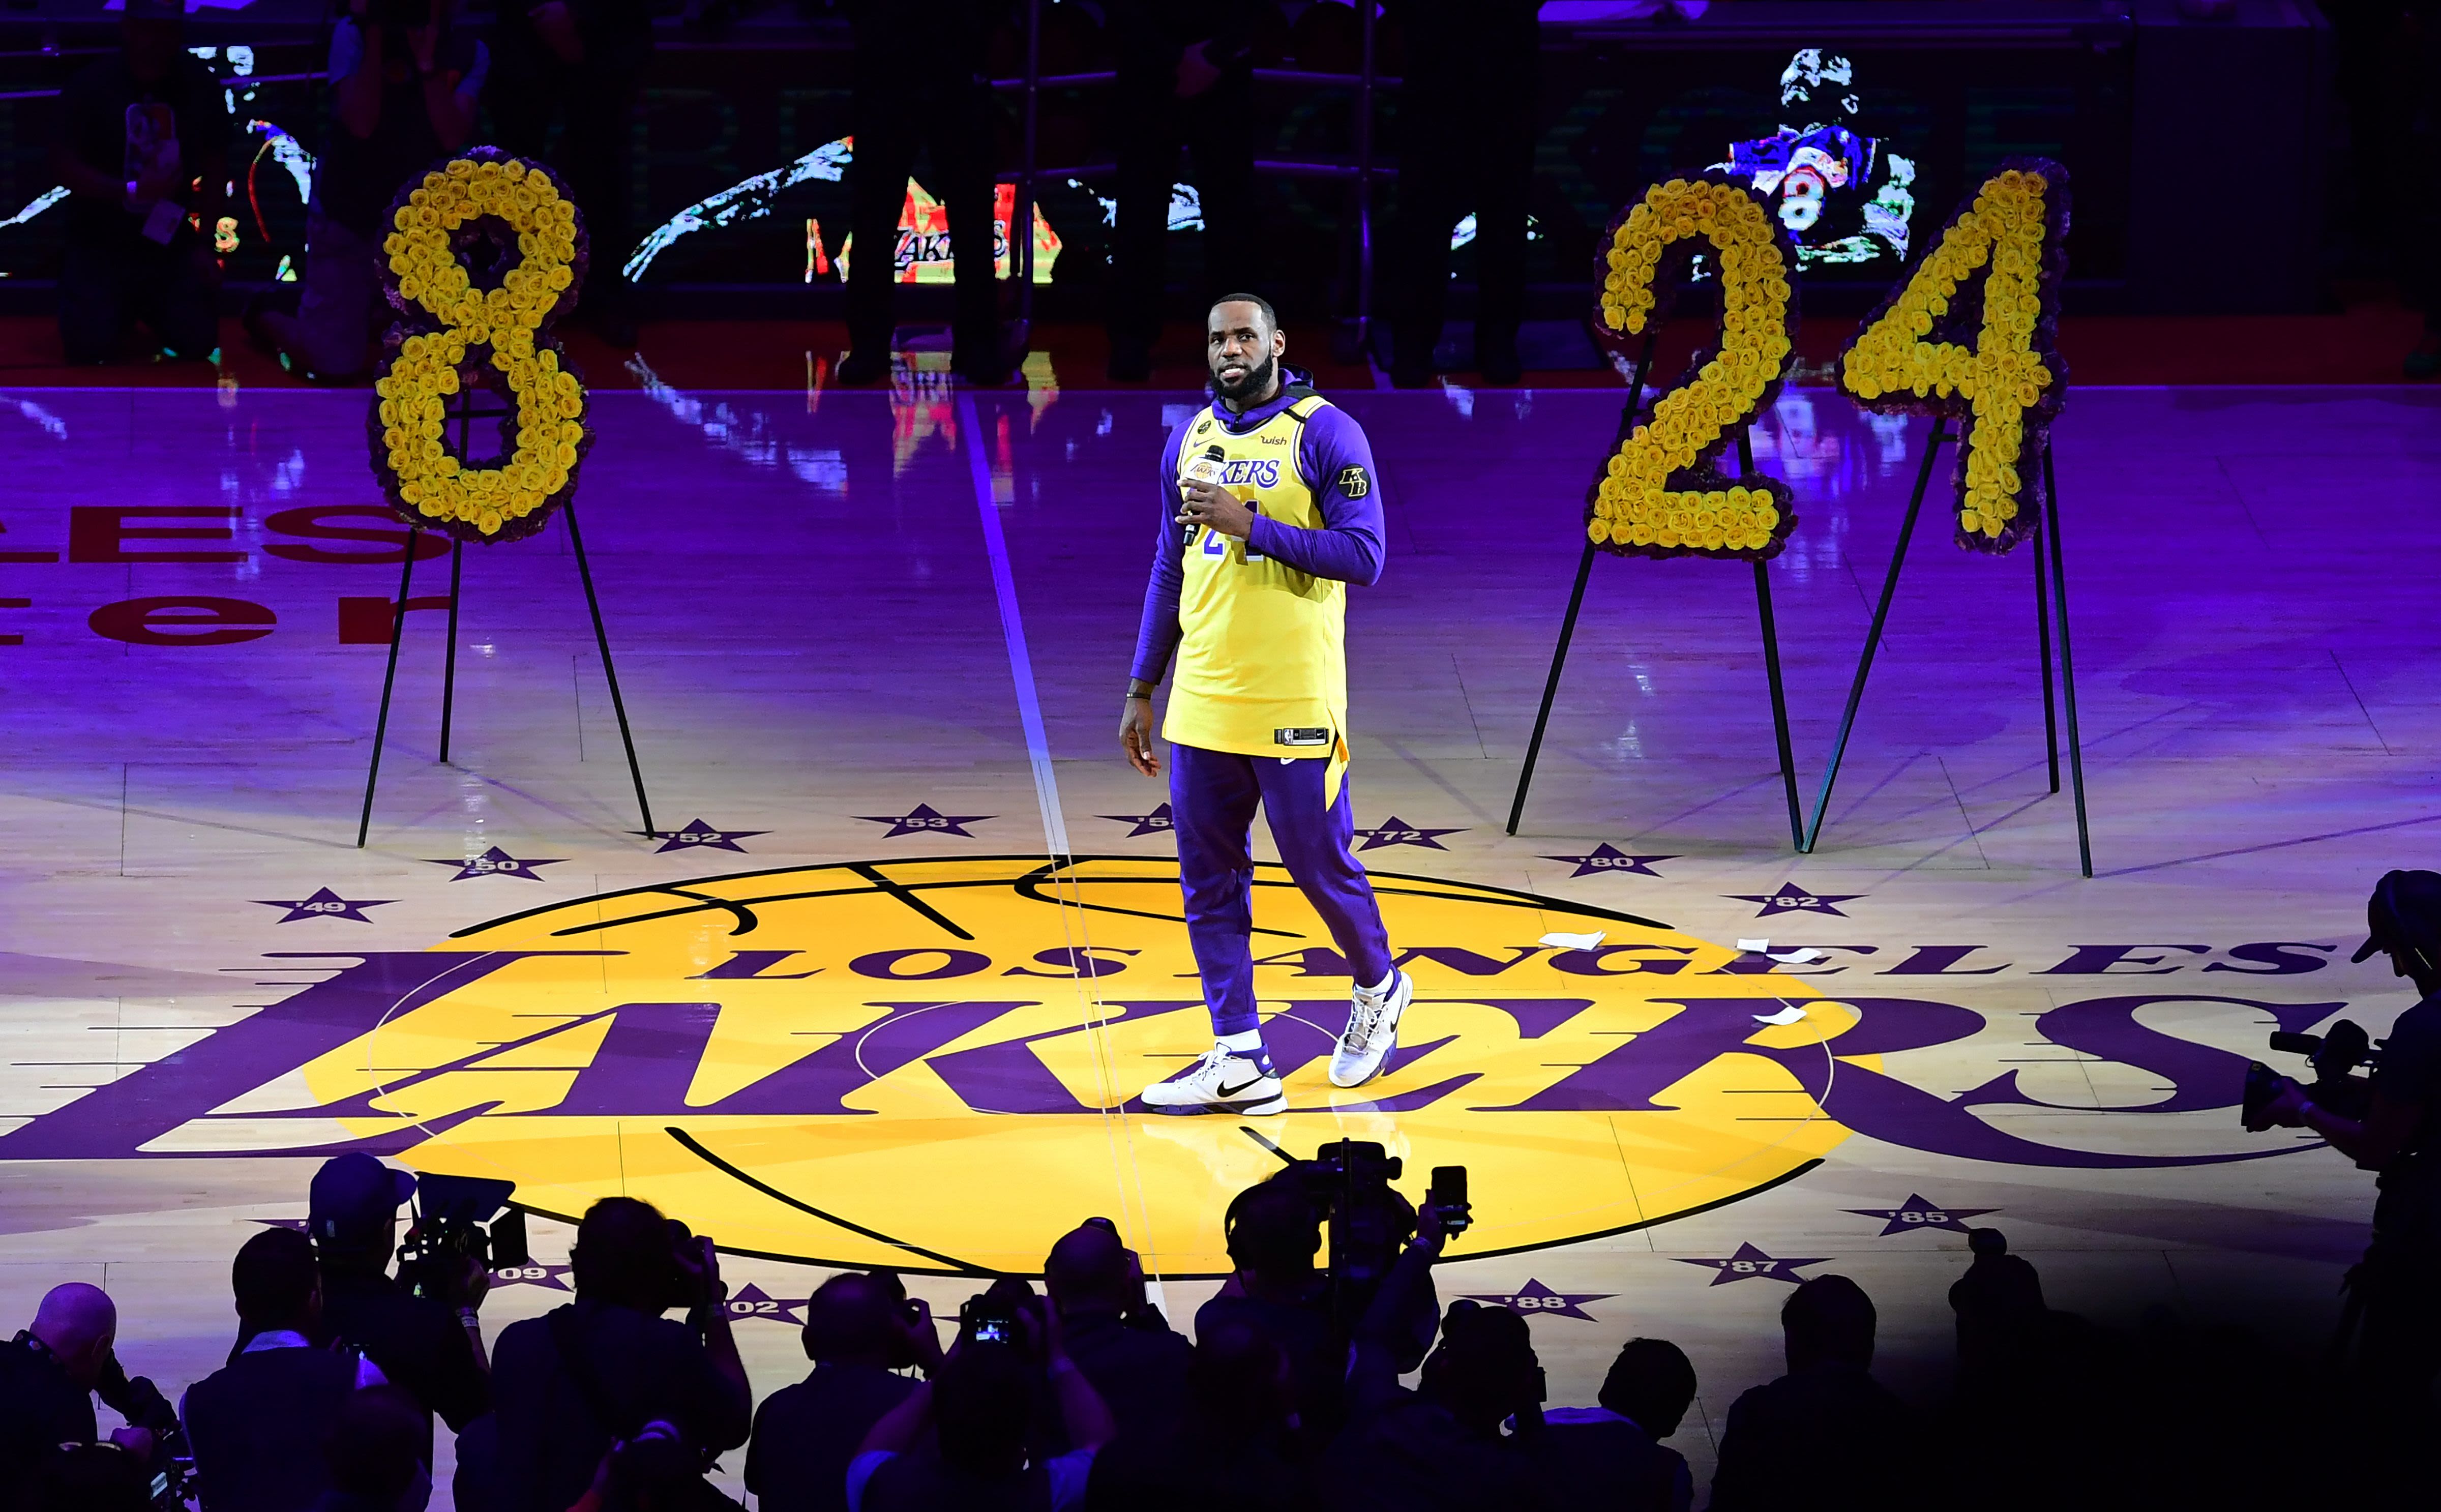 Inside the magic of Lakers' Black Mamba jerseys designed by Kobe